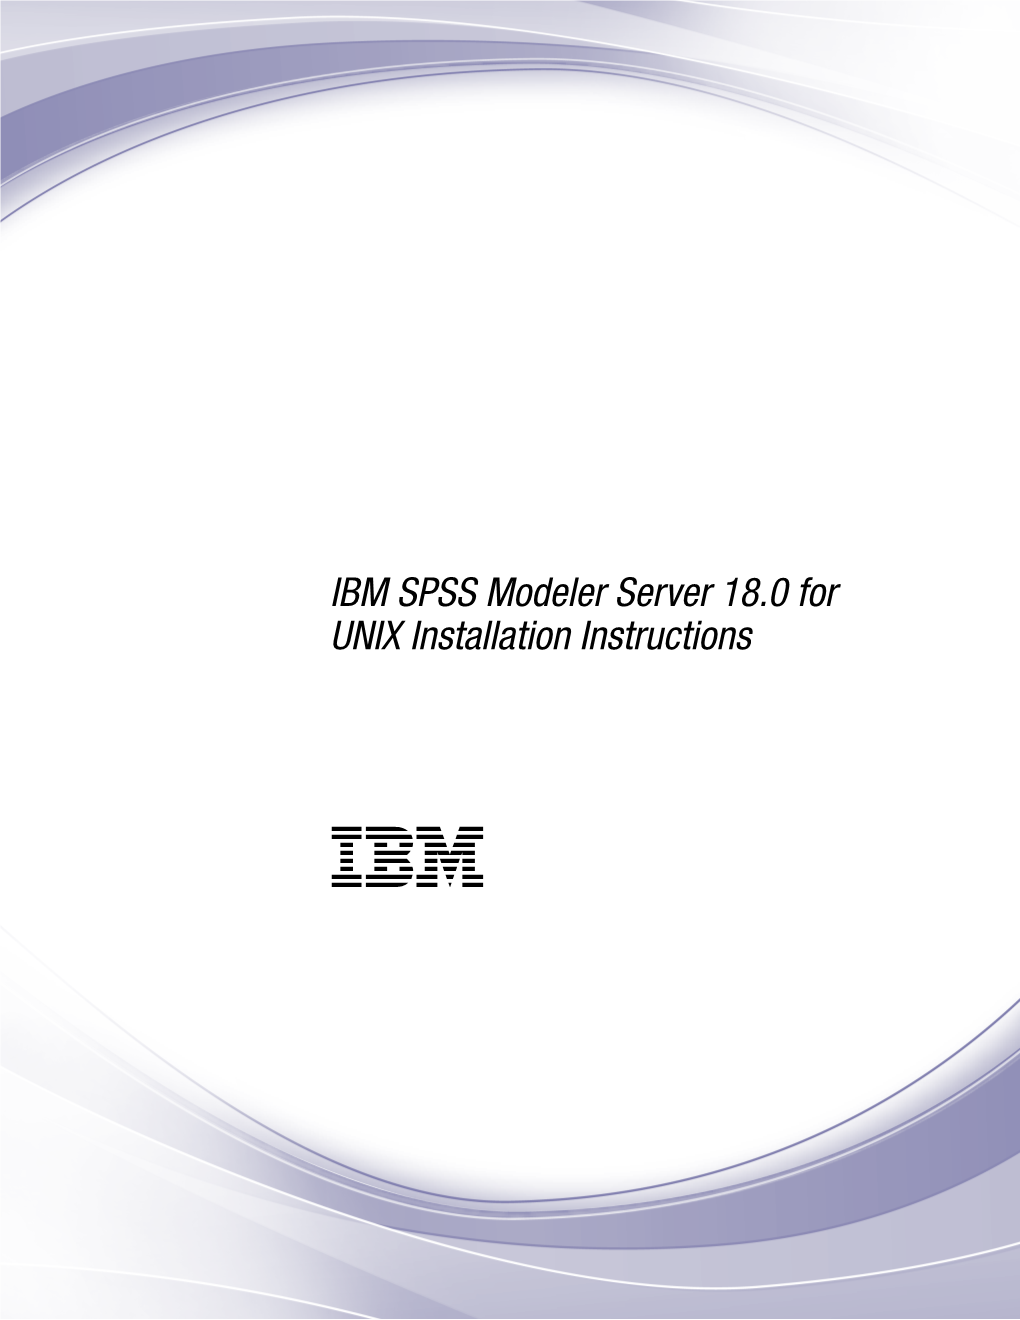 IBM SPSS Modeler Server 18.0 for UNIX Installation Instructions